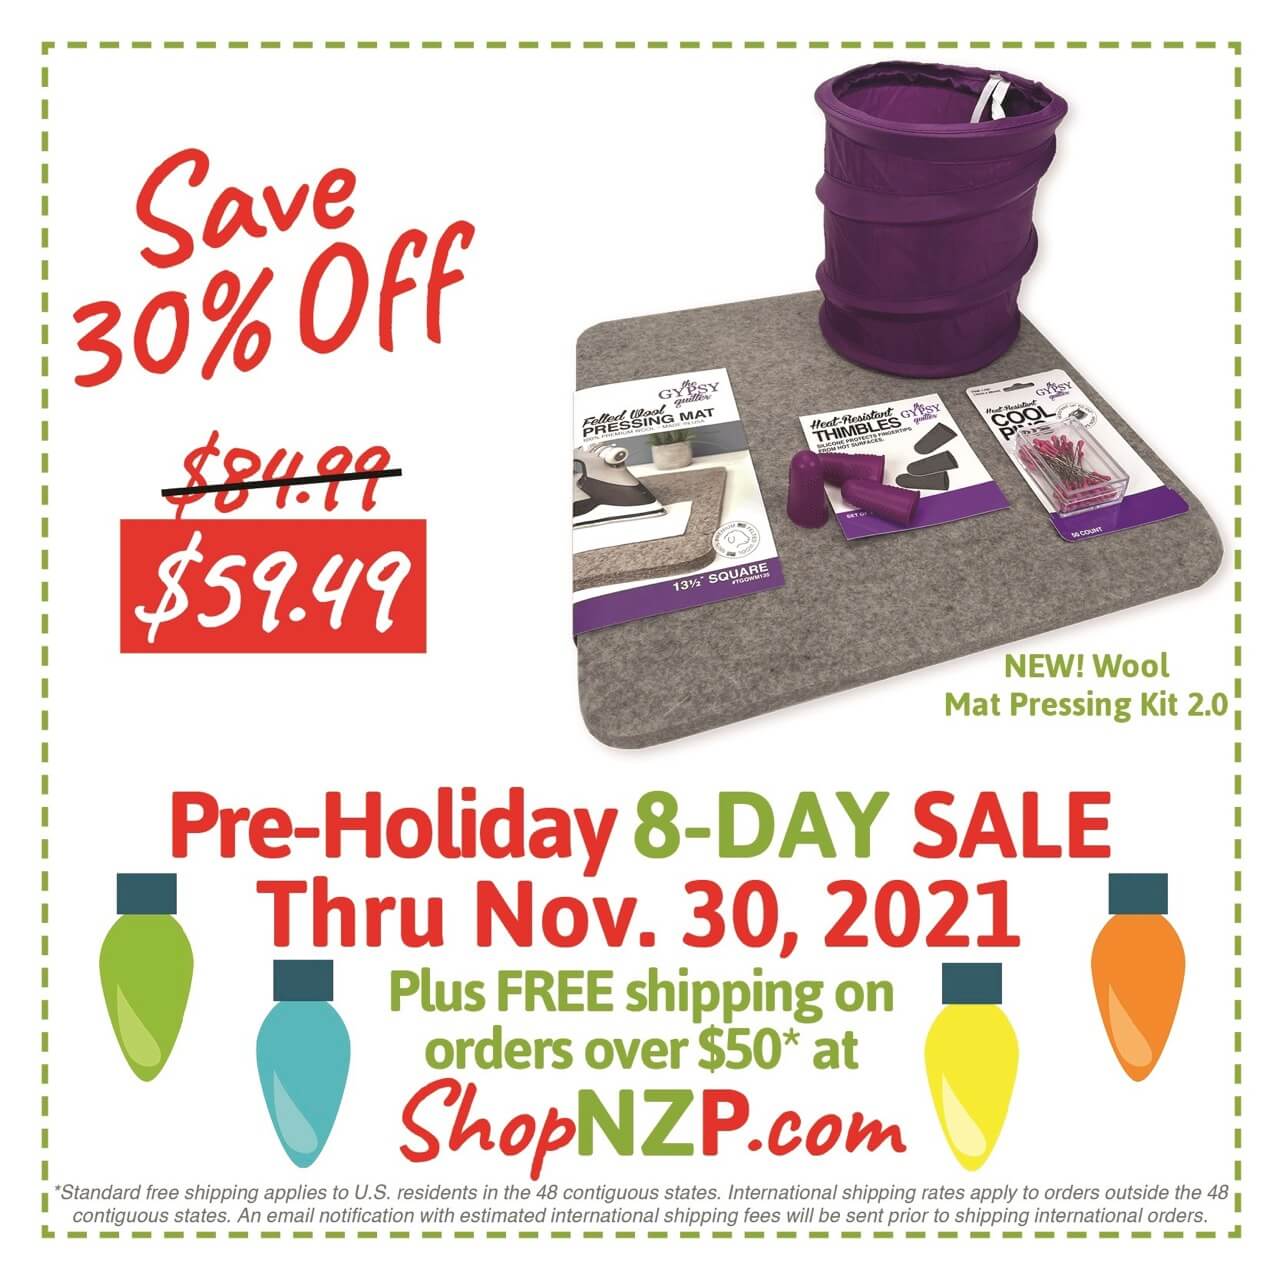 Save 30 Percent Off Wool Mat Pressing Kit 2.0 at Nancy Zieman Productions at ShopNZP.com Sale Nov 23-30, 2021